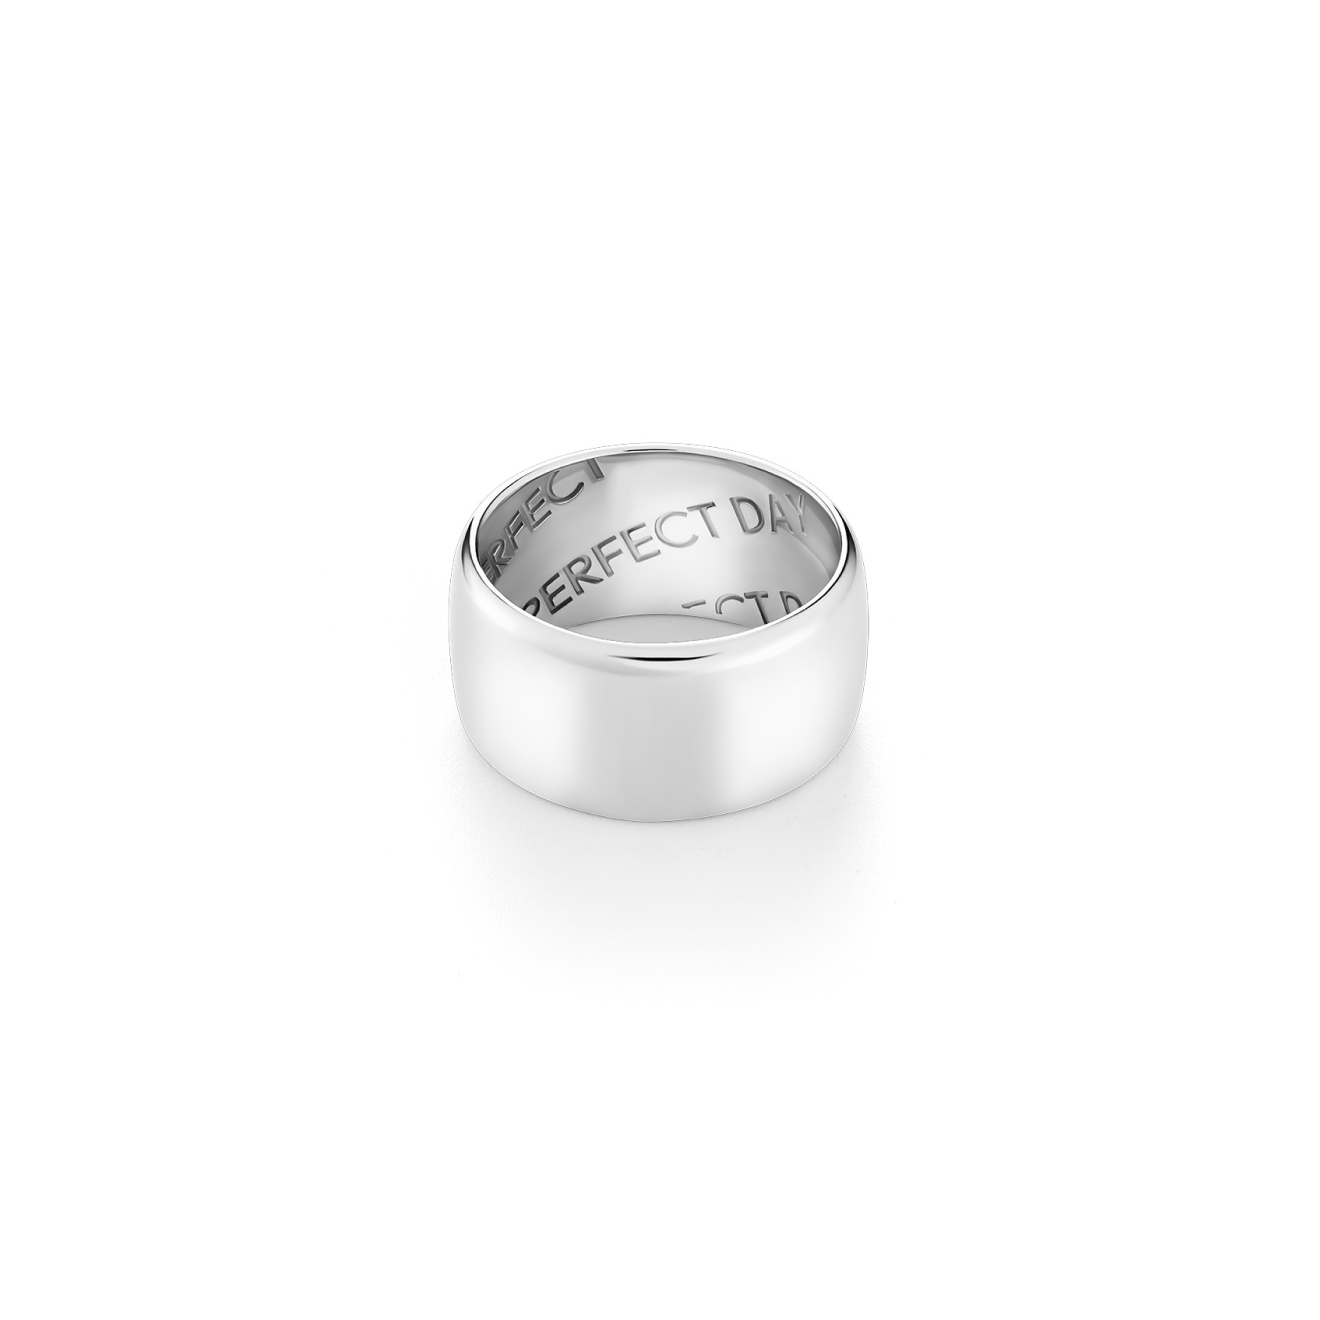 Avgvst Широкое кольцо из серебра PERFECT DAY avgvst браслет бисерный жгут из серебра из коллекции paillettes